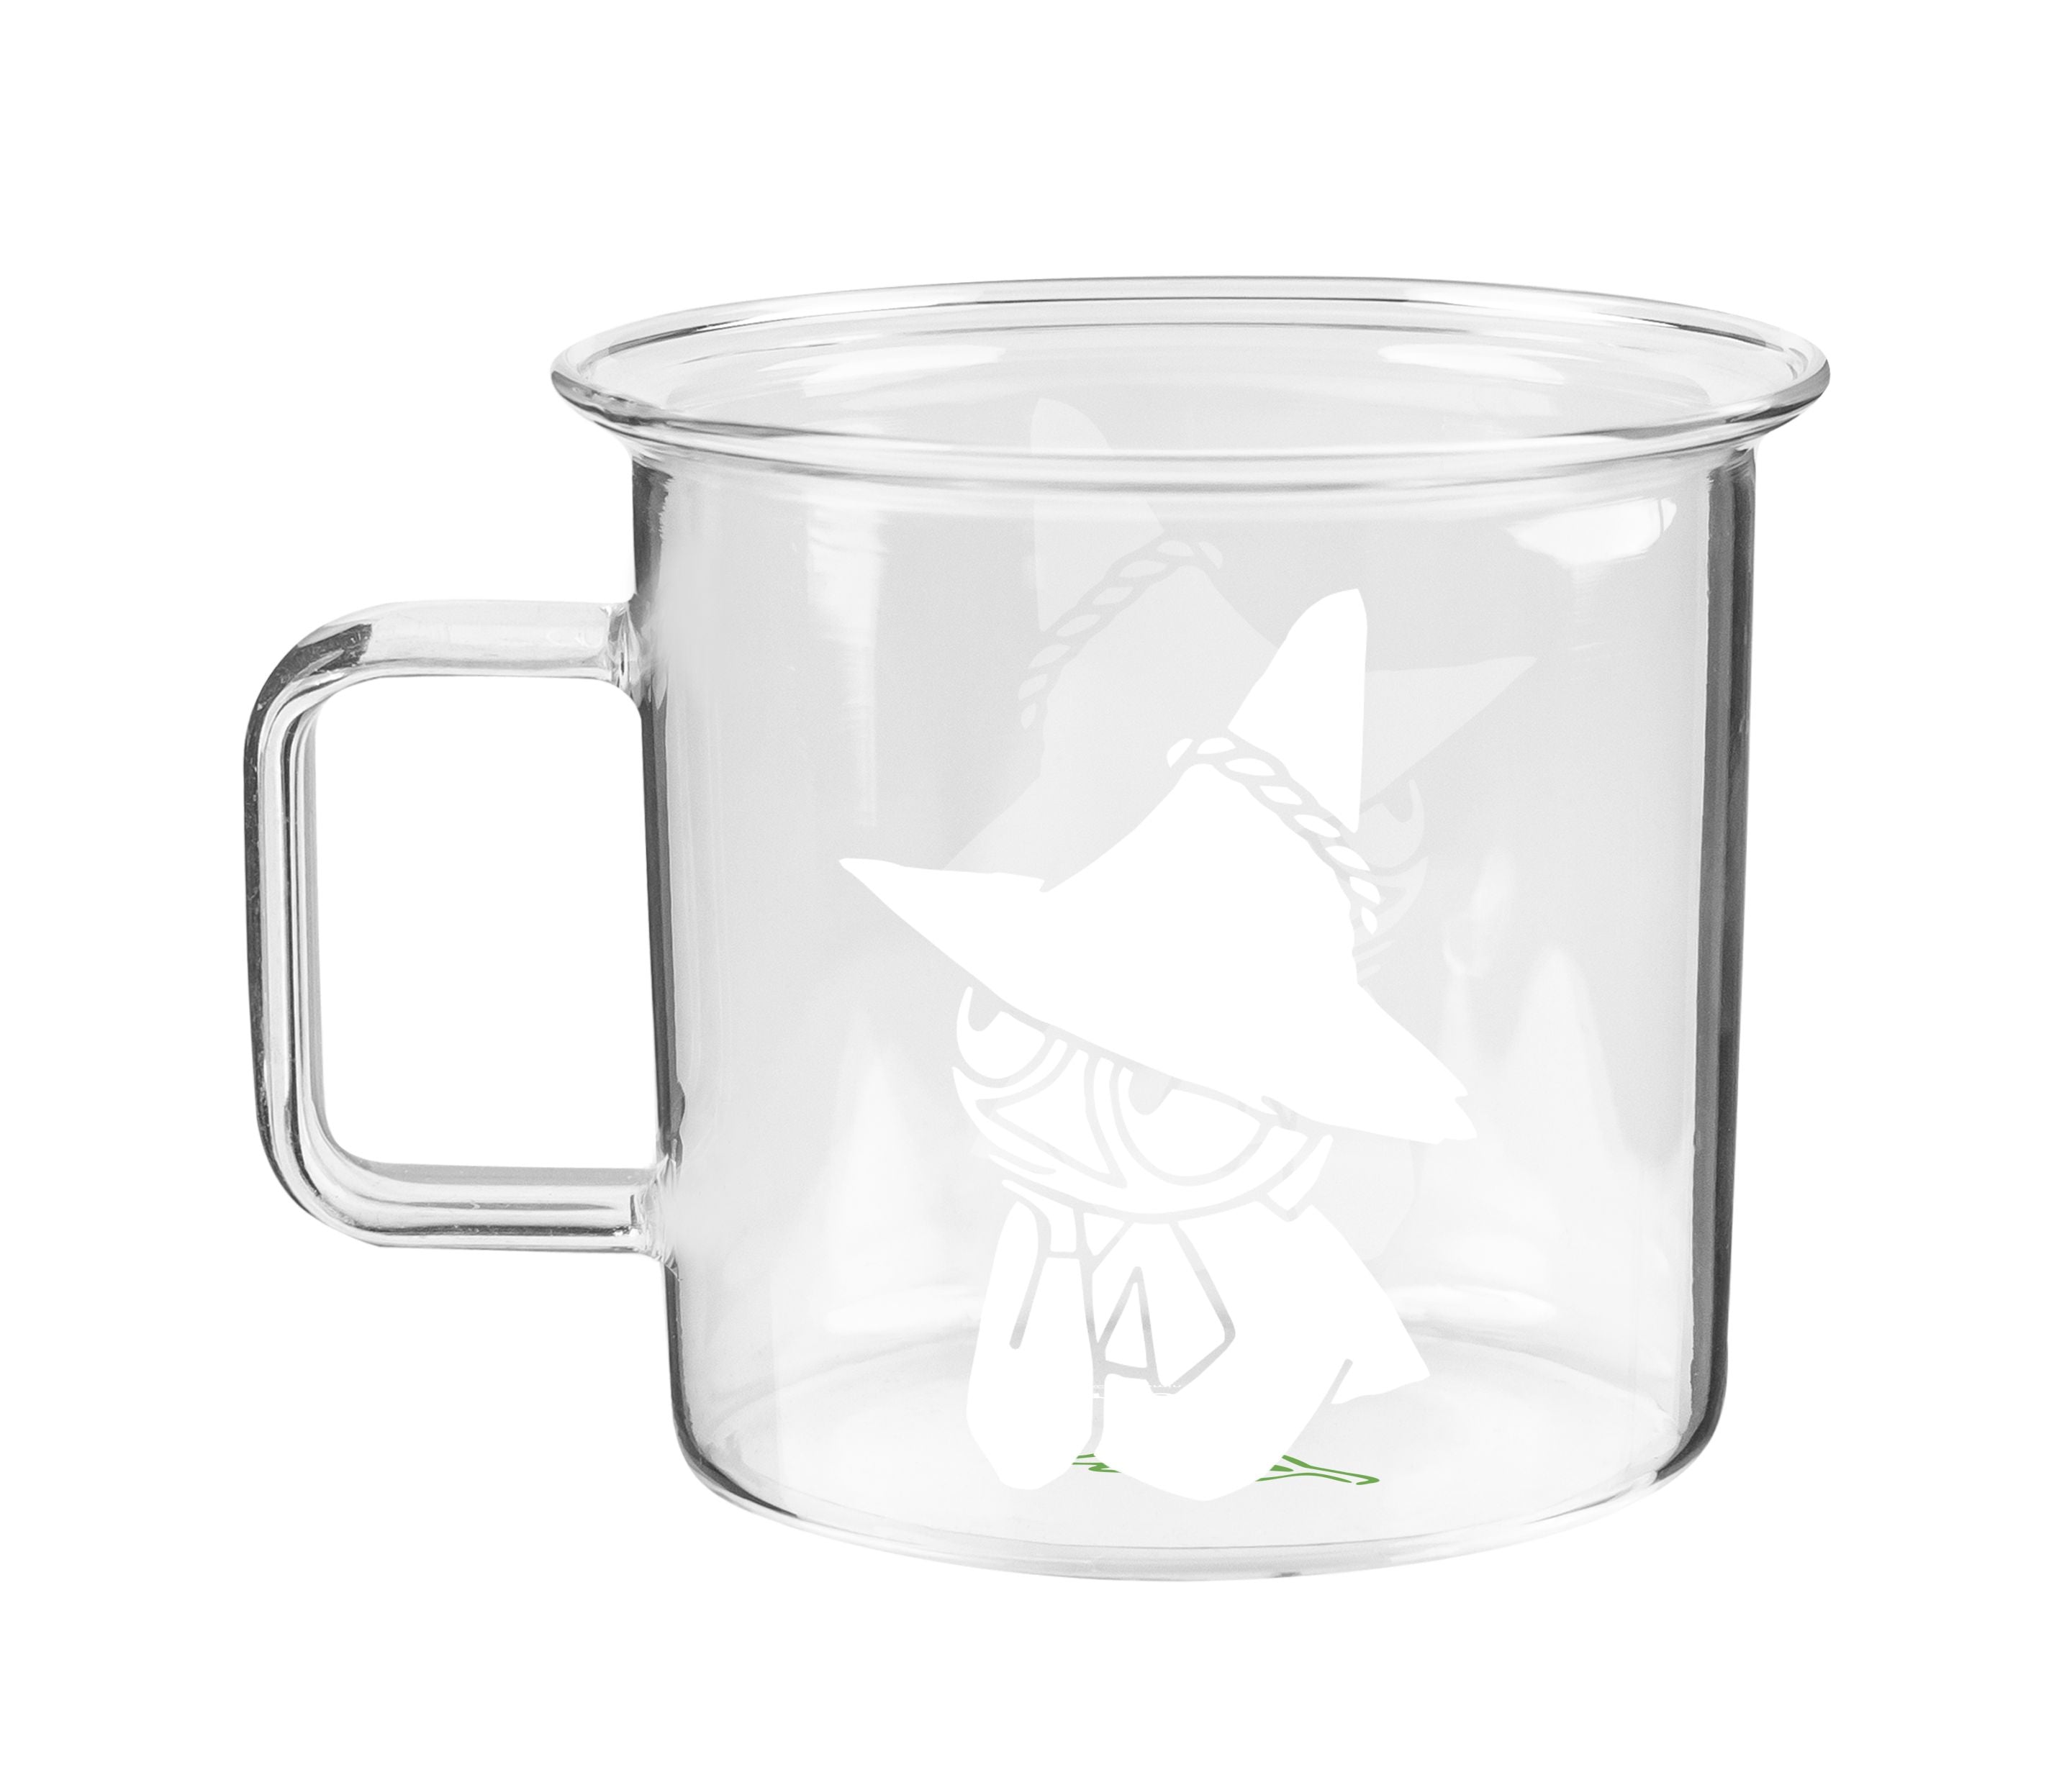 Muurla Moomin en verre tasse 3,5 dl, Snufkin